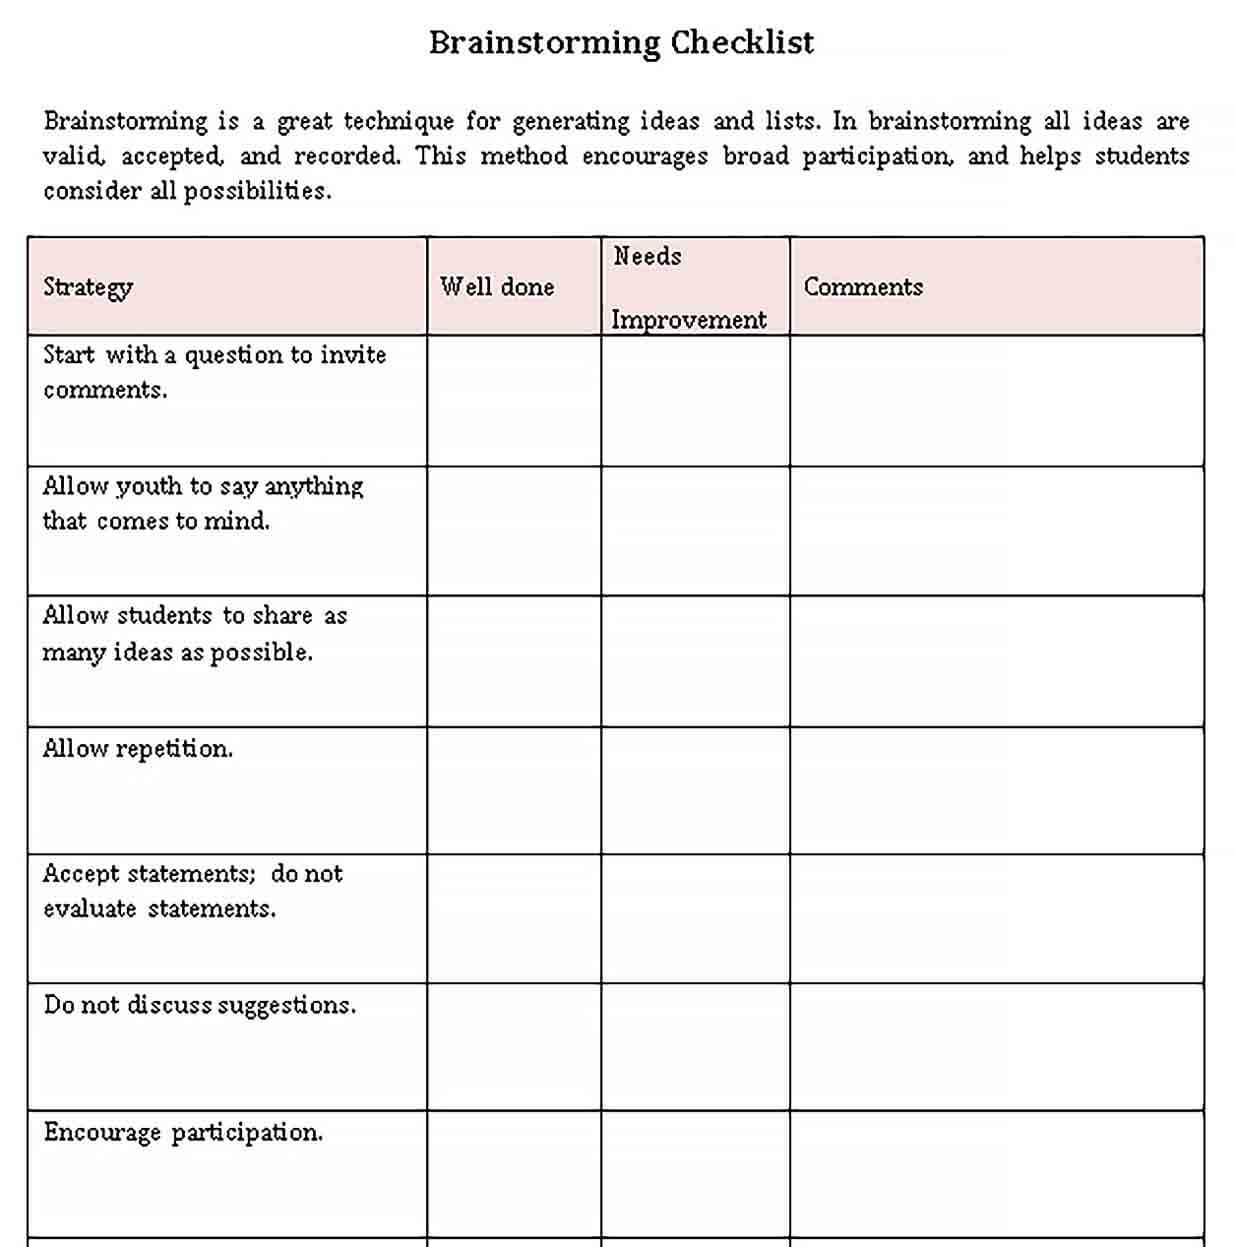 Sample Simple Brainstorming Checklist Template